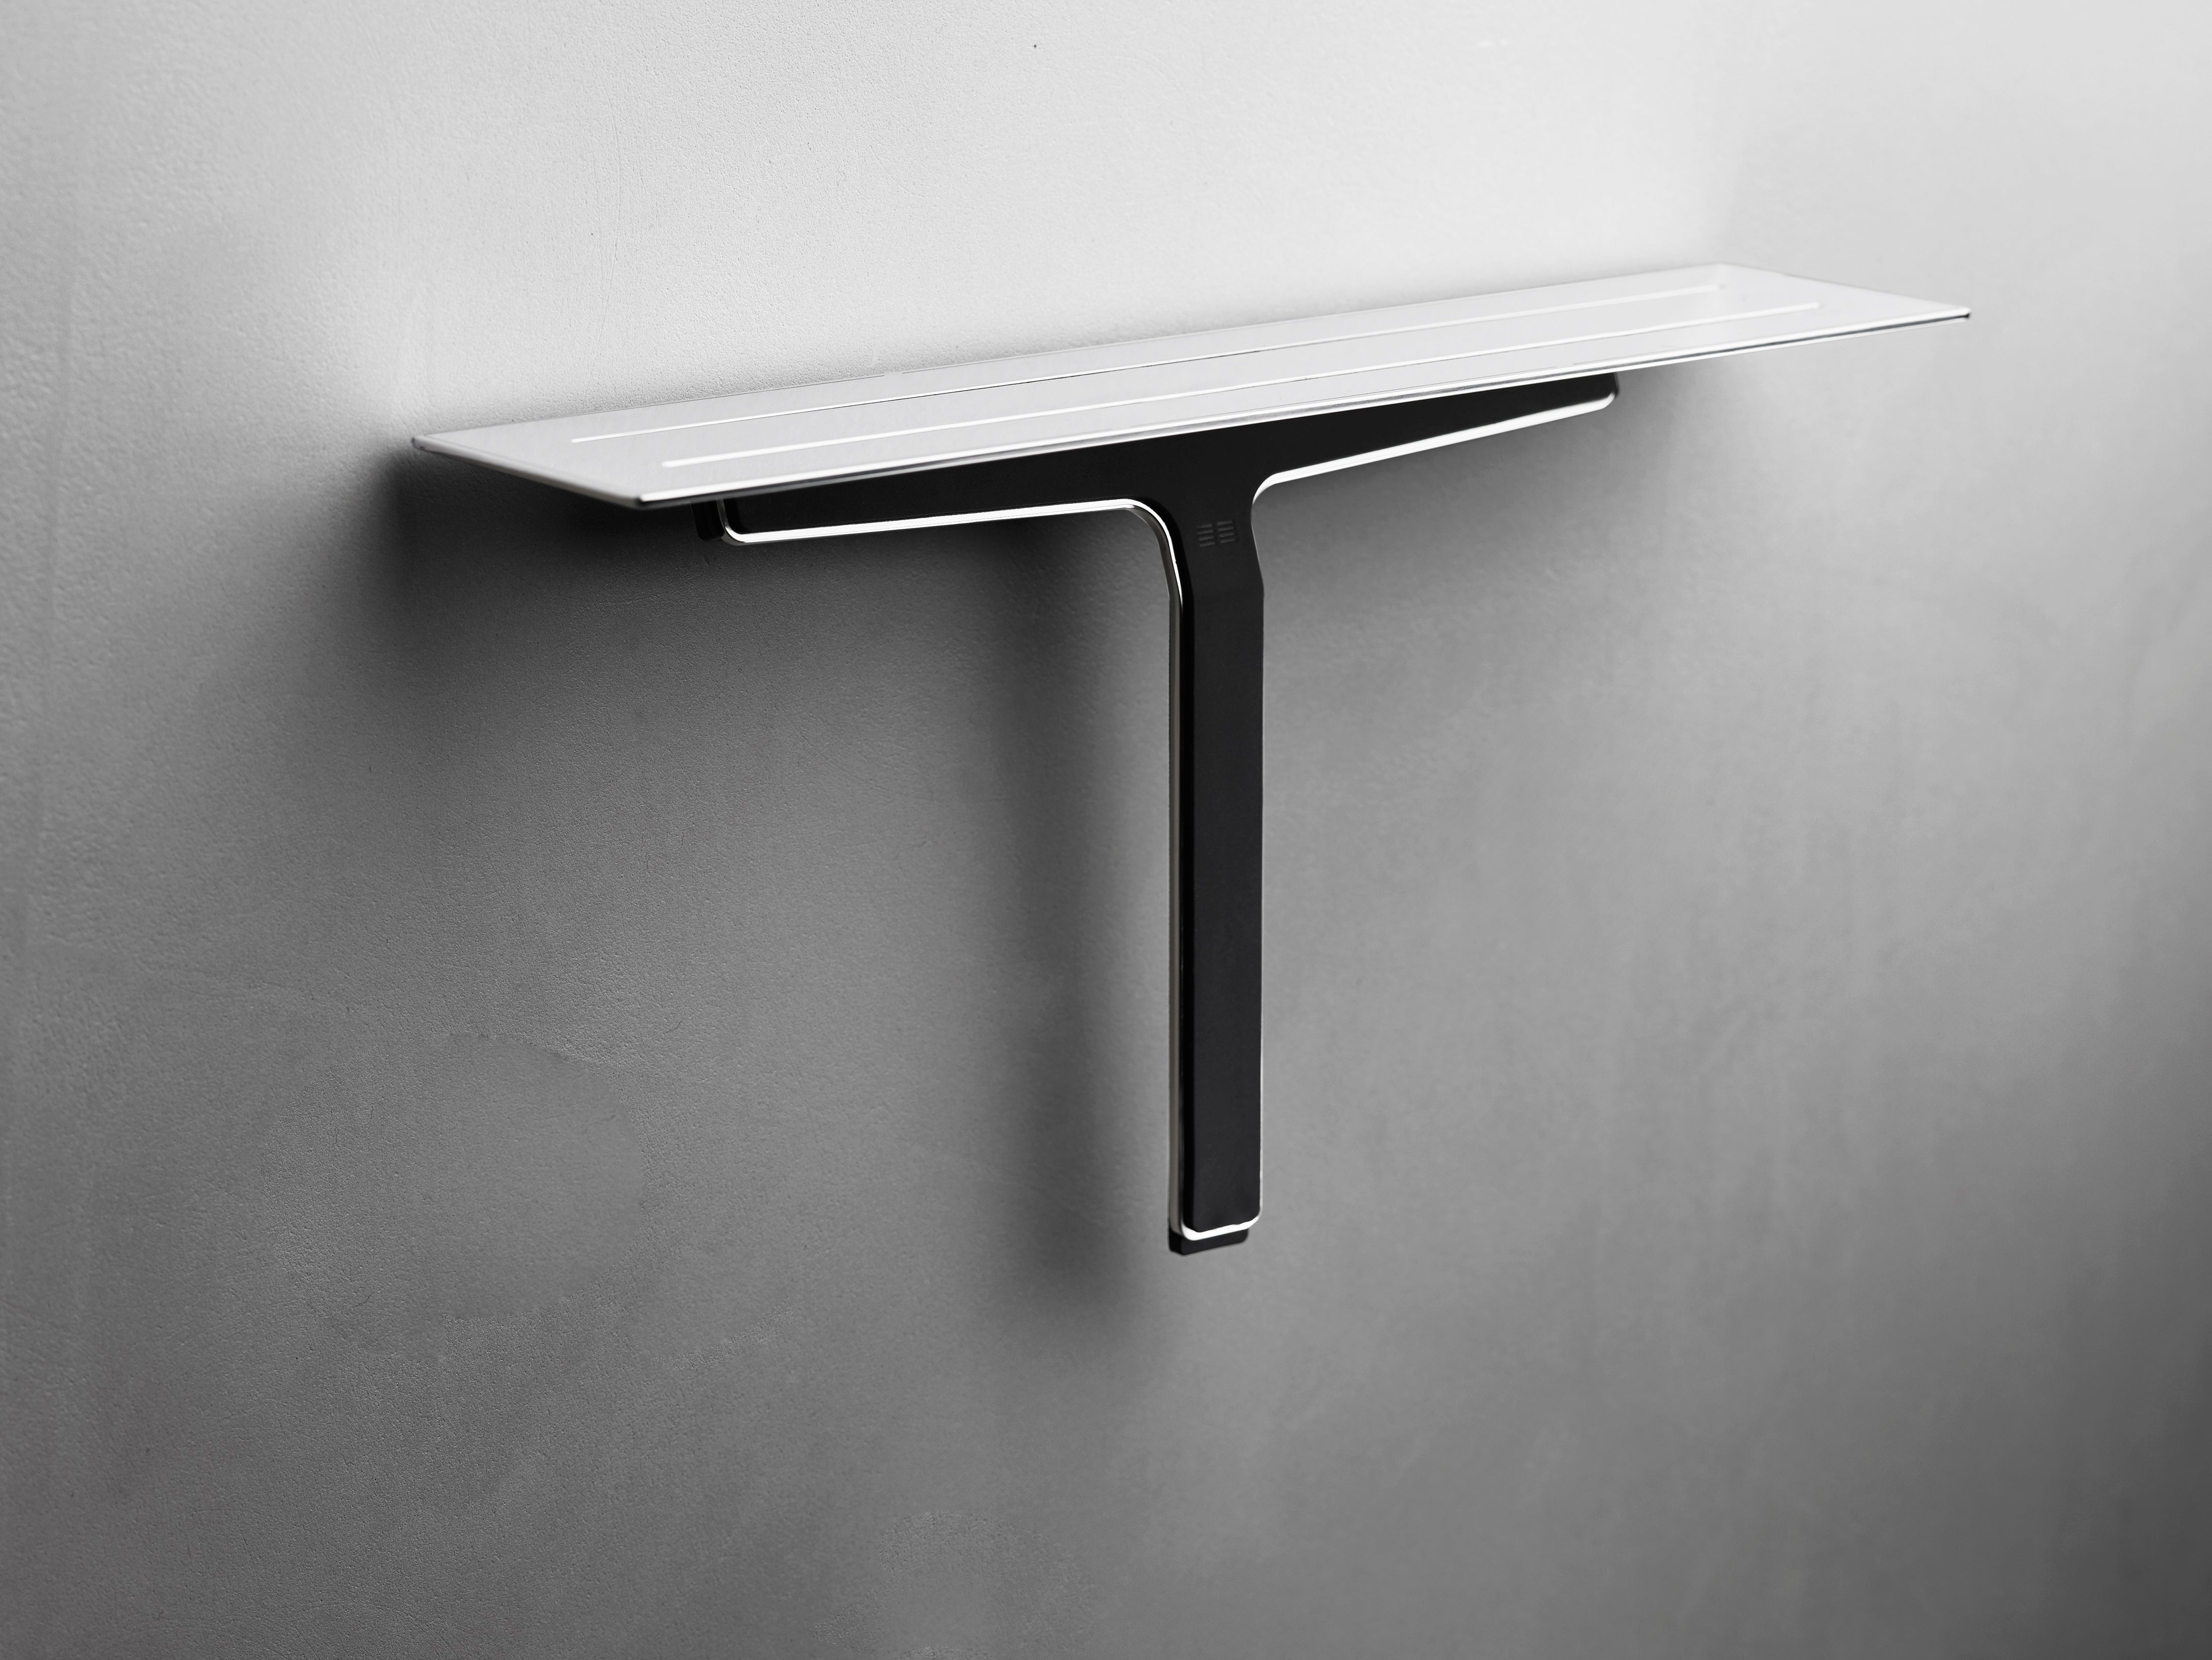 Unidrain Reframe Shower tray & Wiper - hand polished